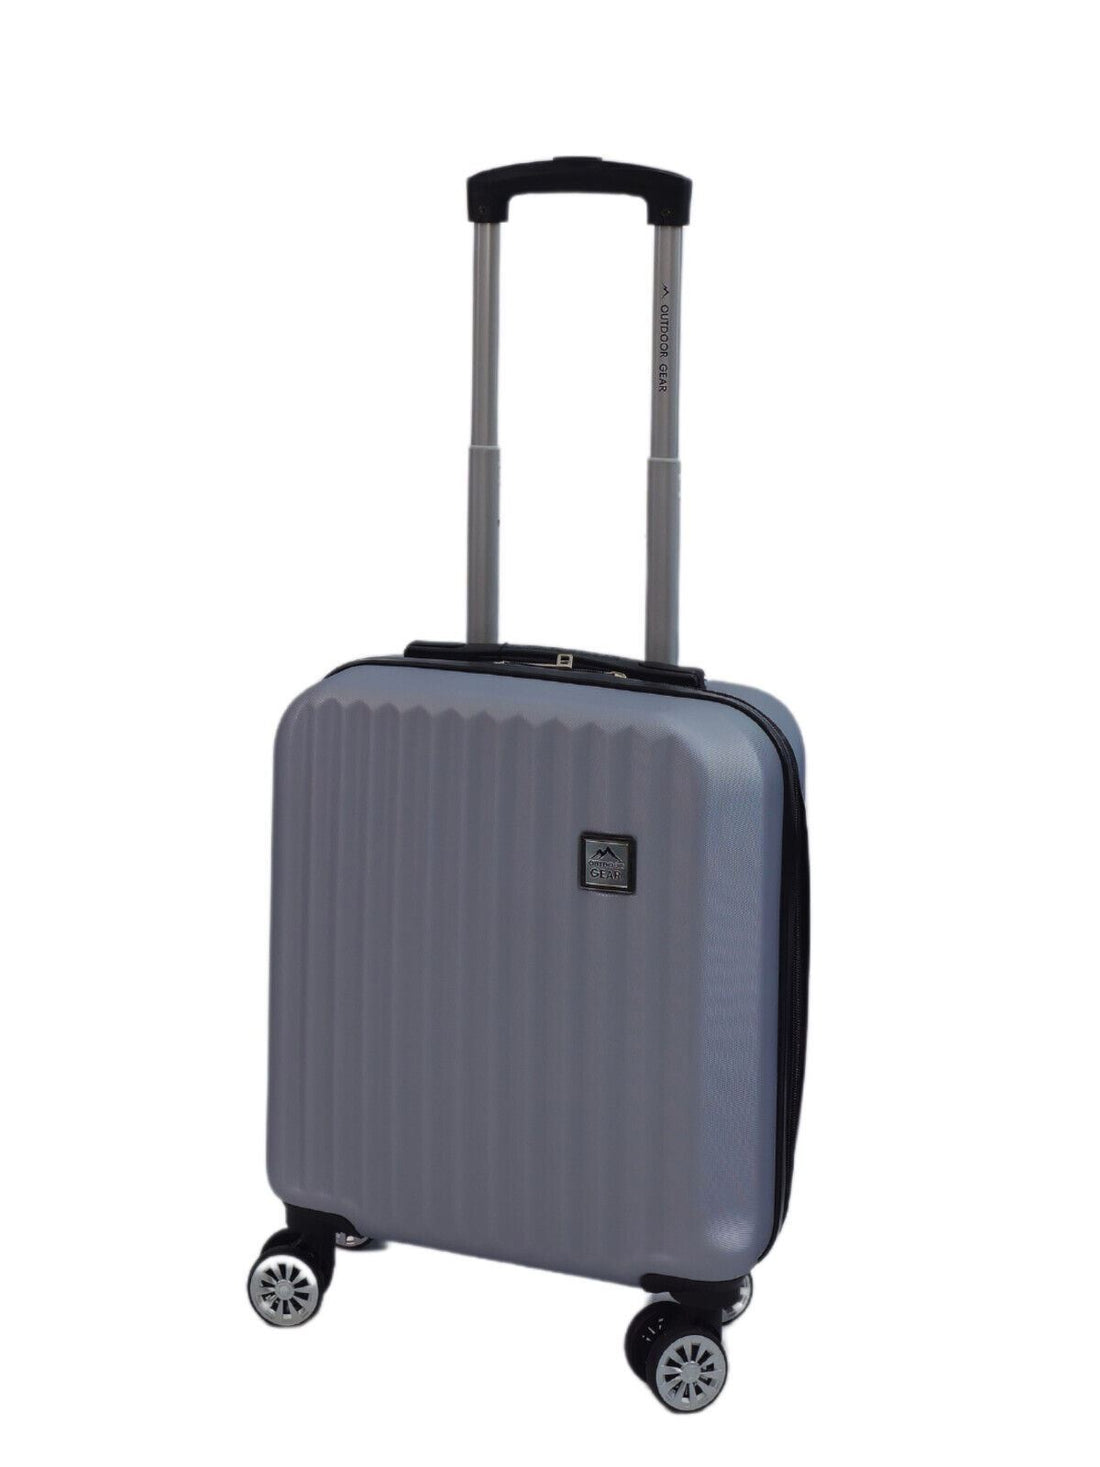 Albertville Underseat Hard Shell Suitcase in Silver